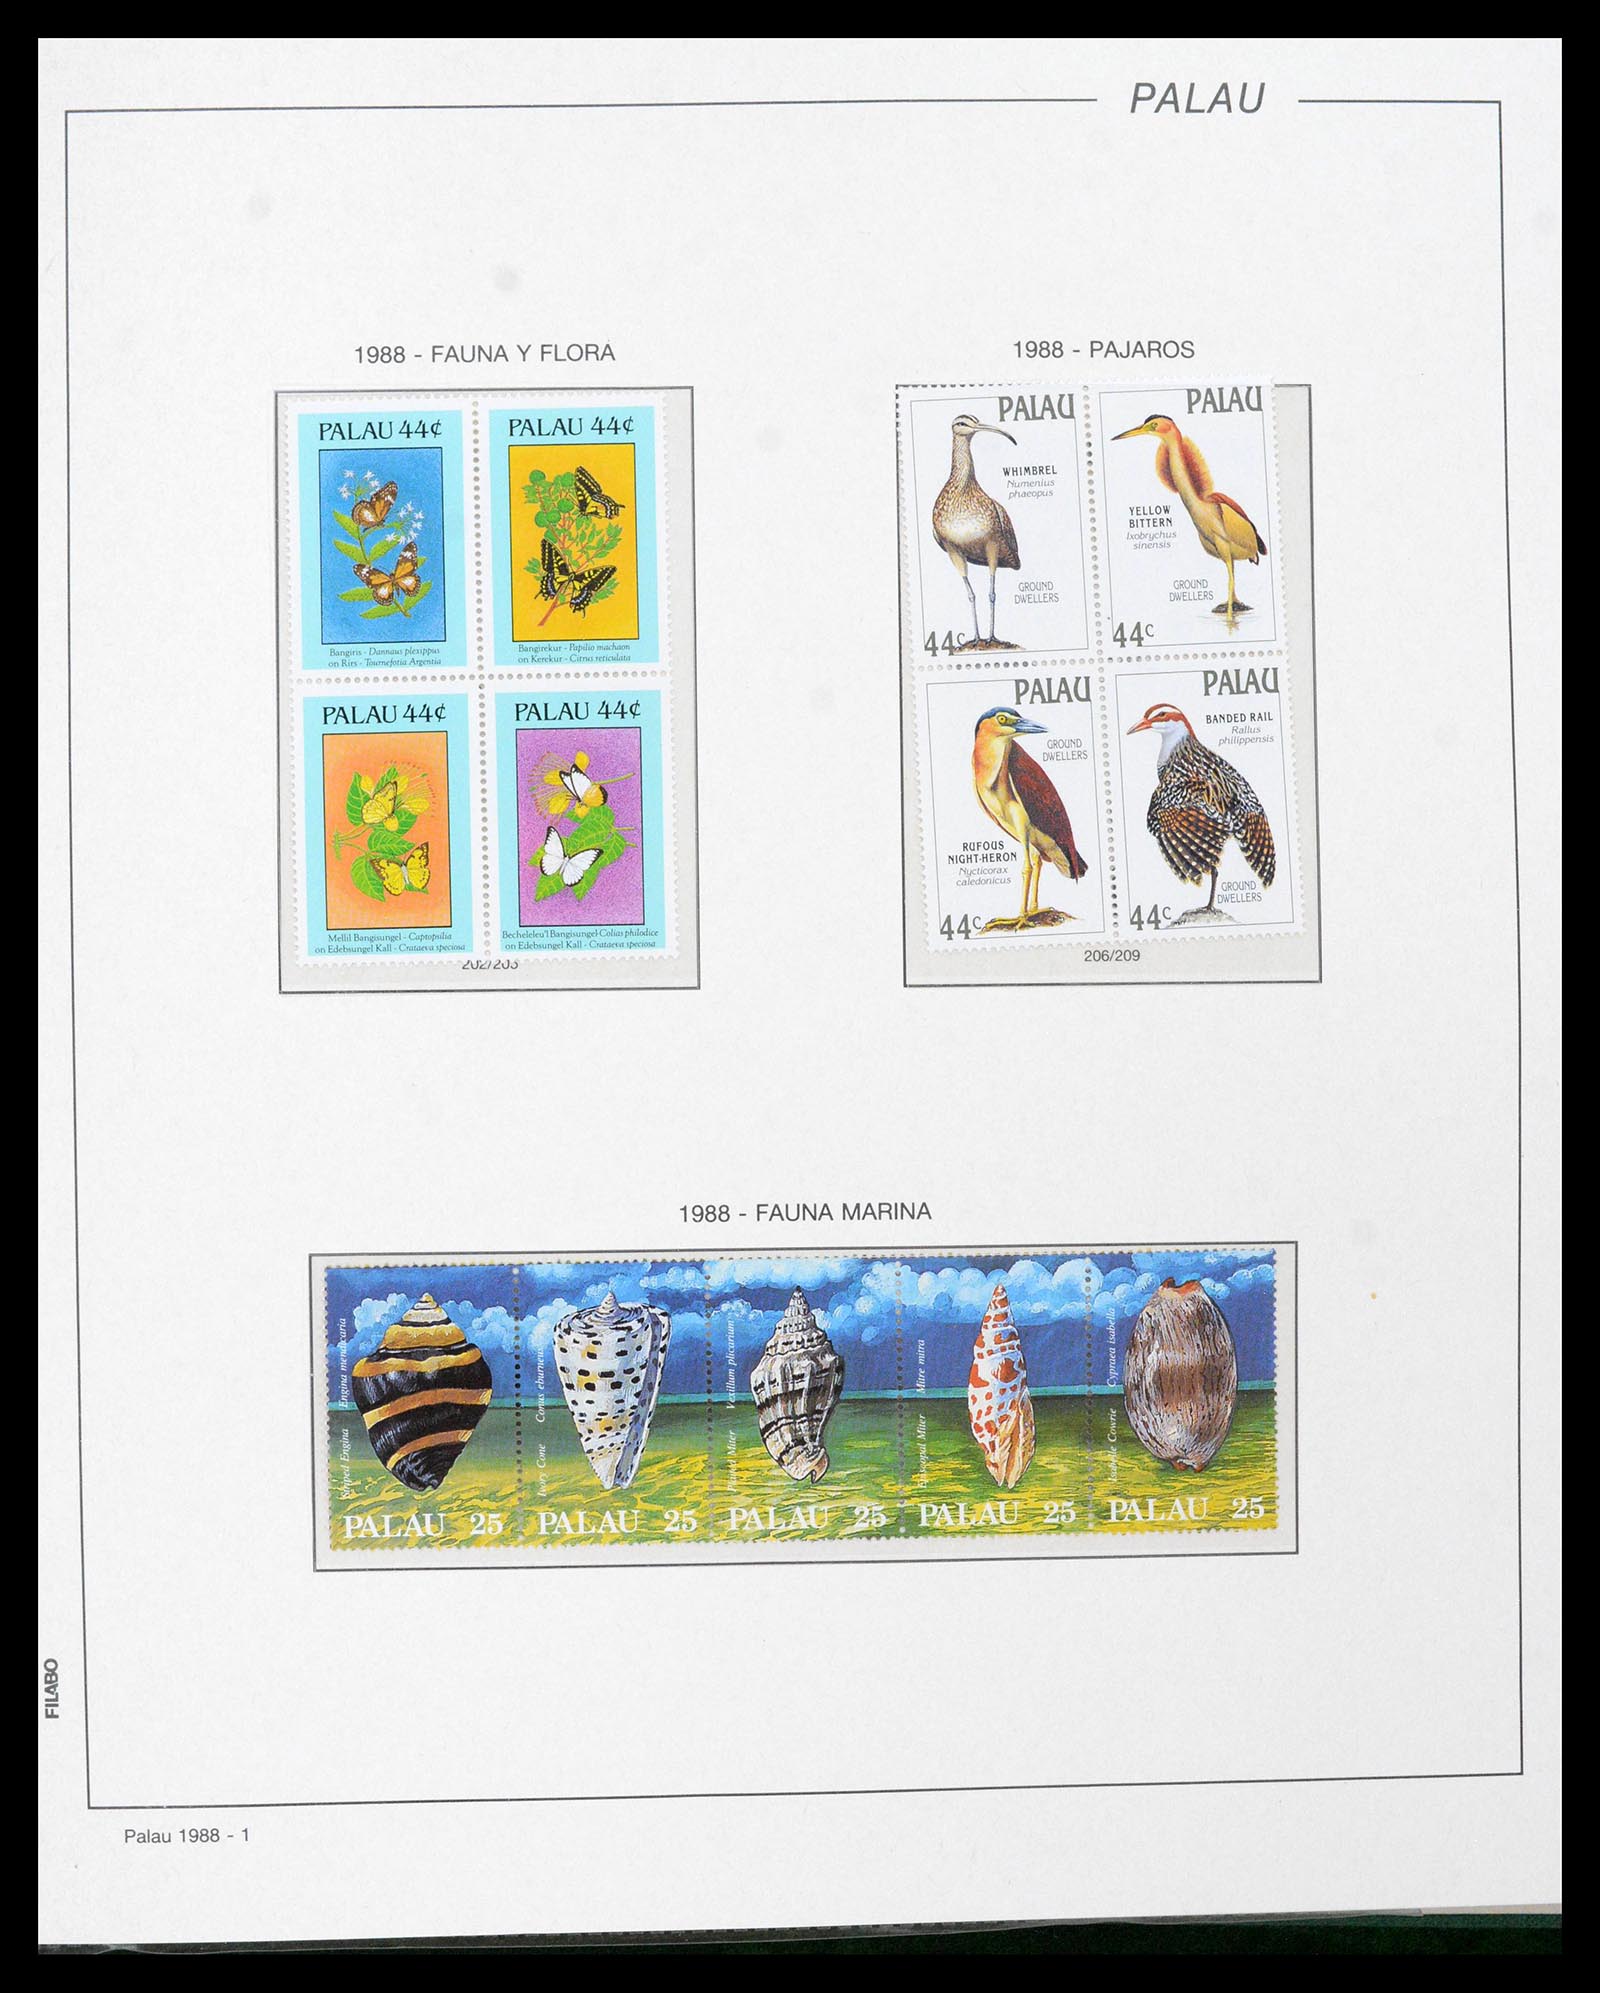 39222 0021 - Stamp collection 39222 Palau, Micronesia and Marshall islands 1980-1995.